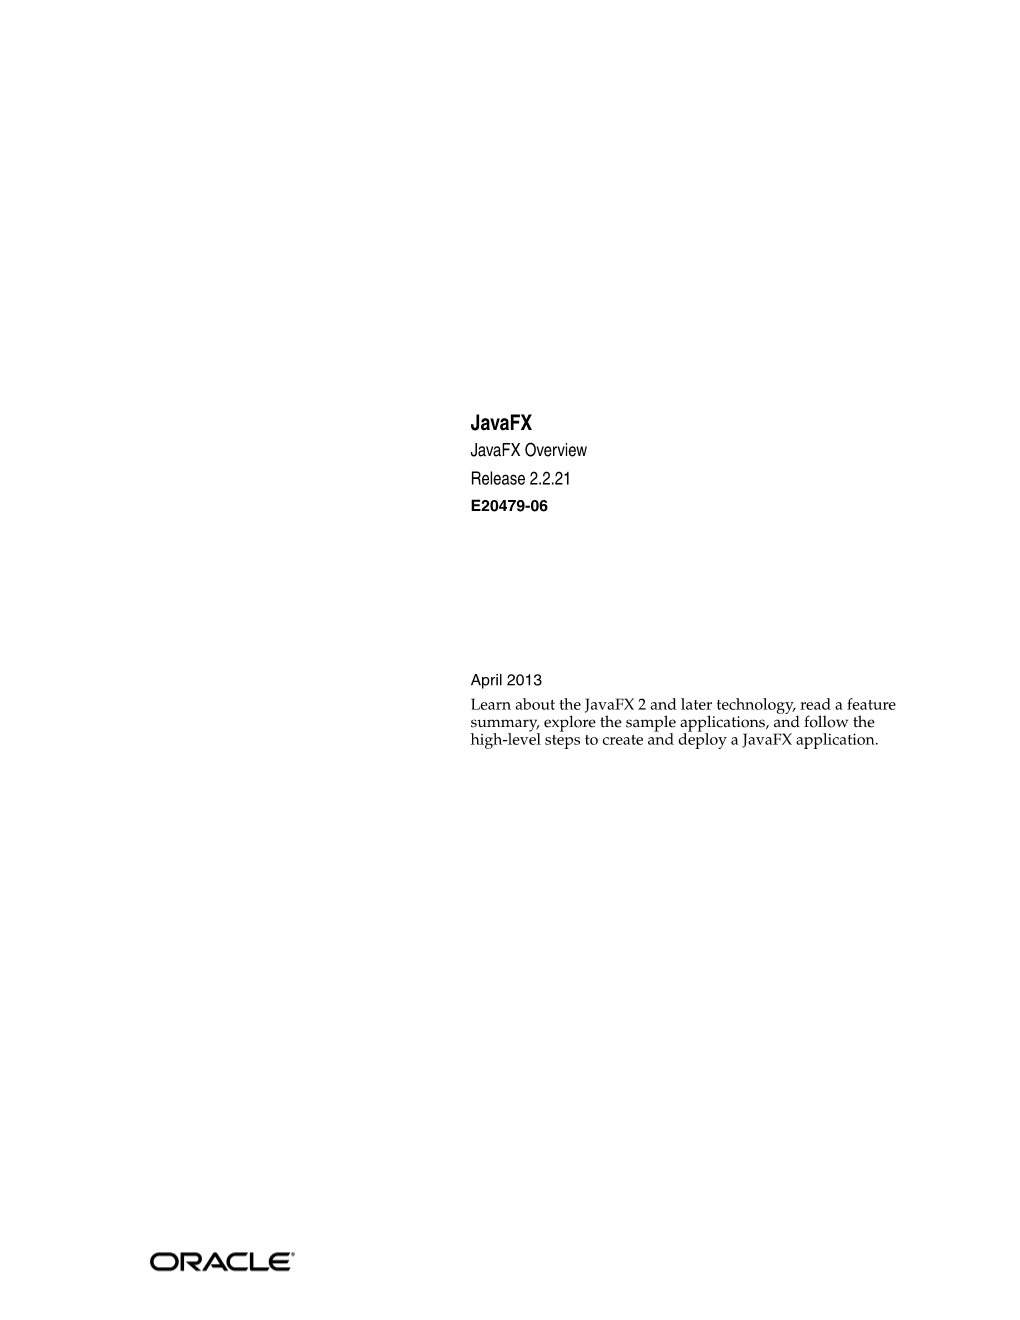 Javafx Javafx Overview Release 2.2.21 E20479-06